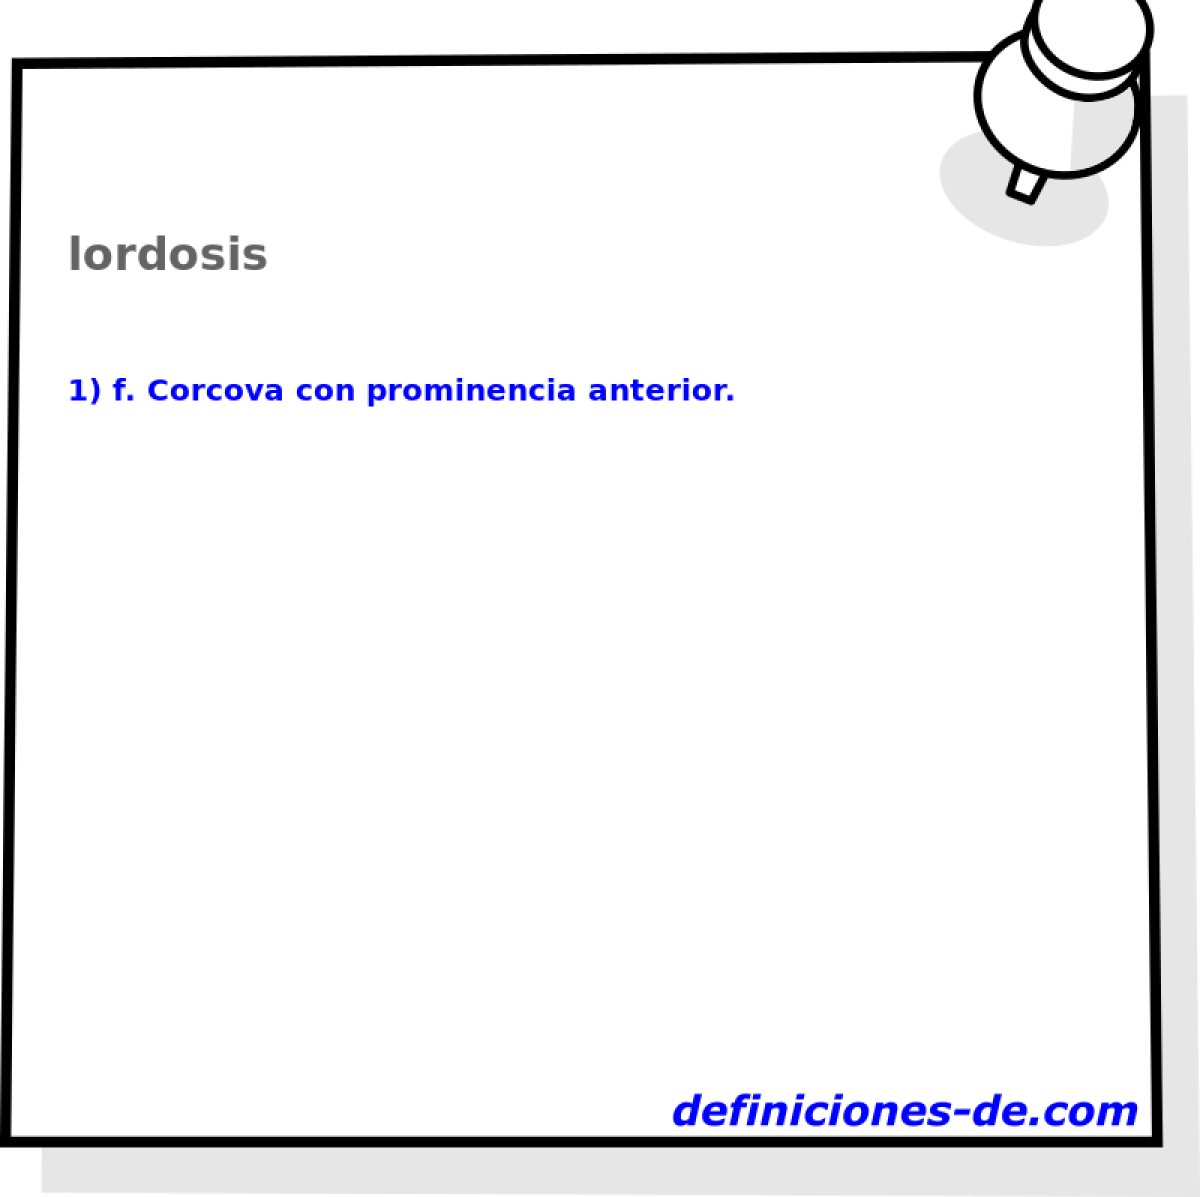 lordosis 